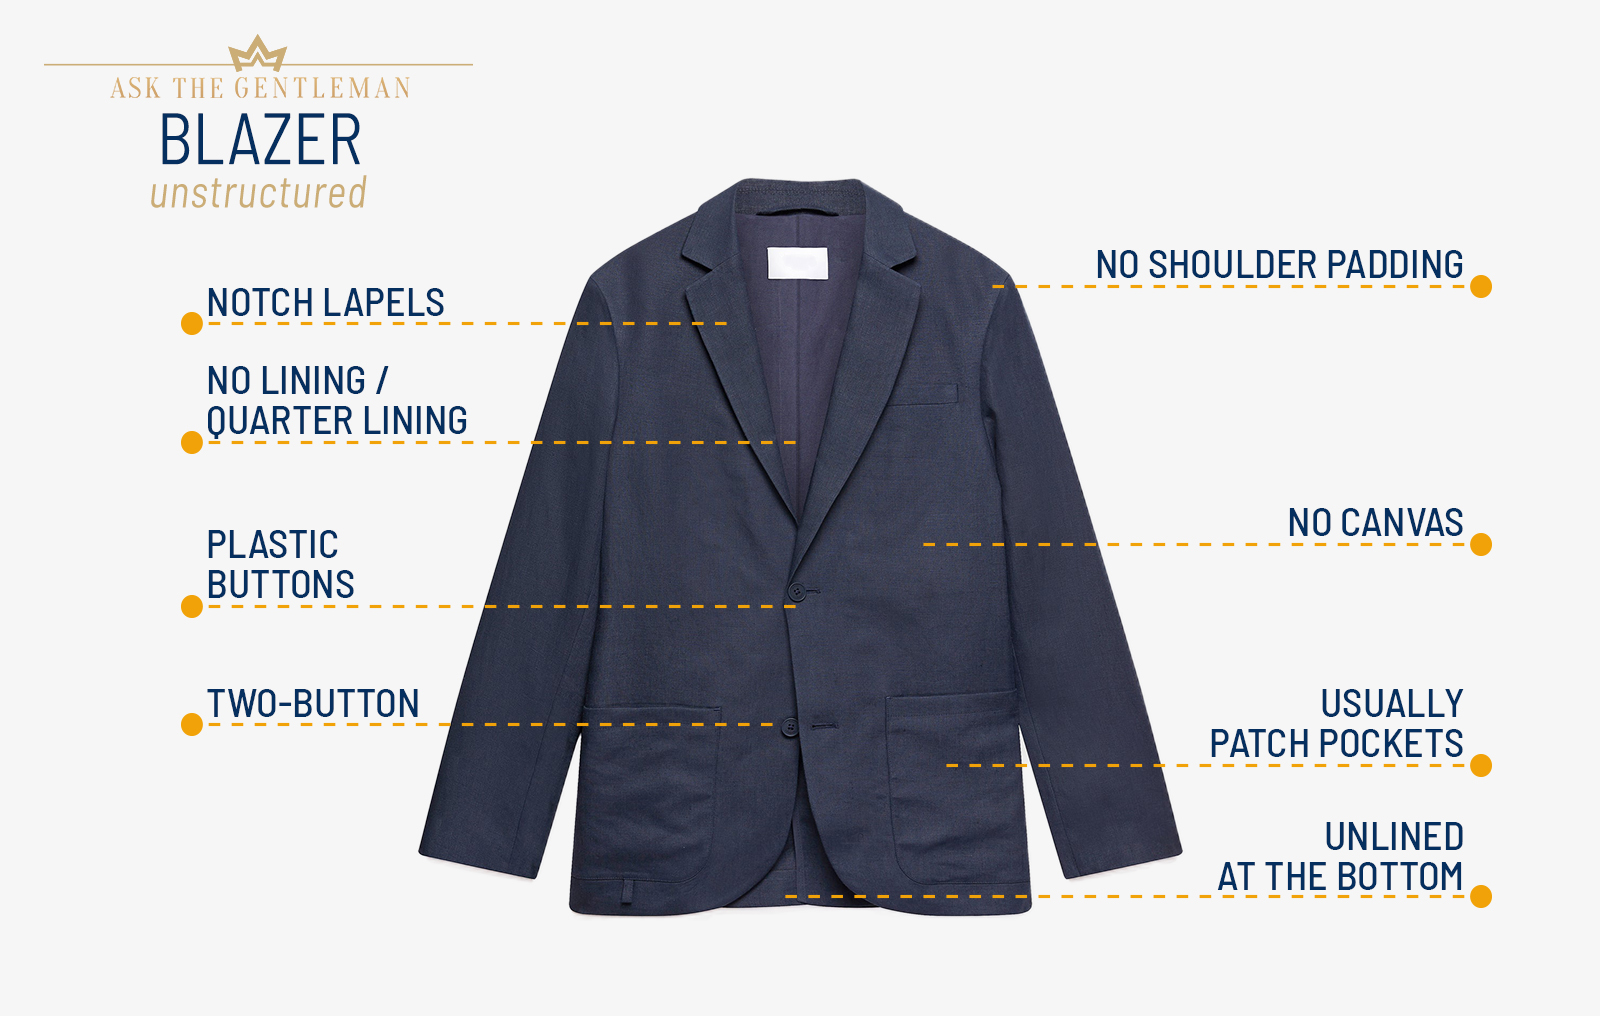 What is an unstructured blazer